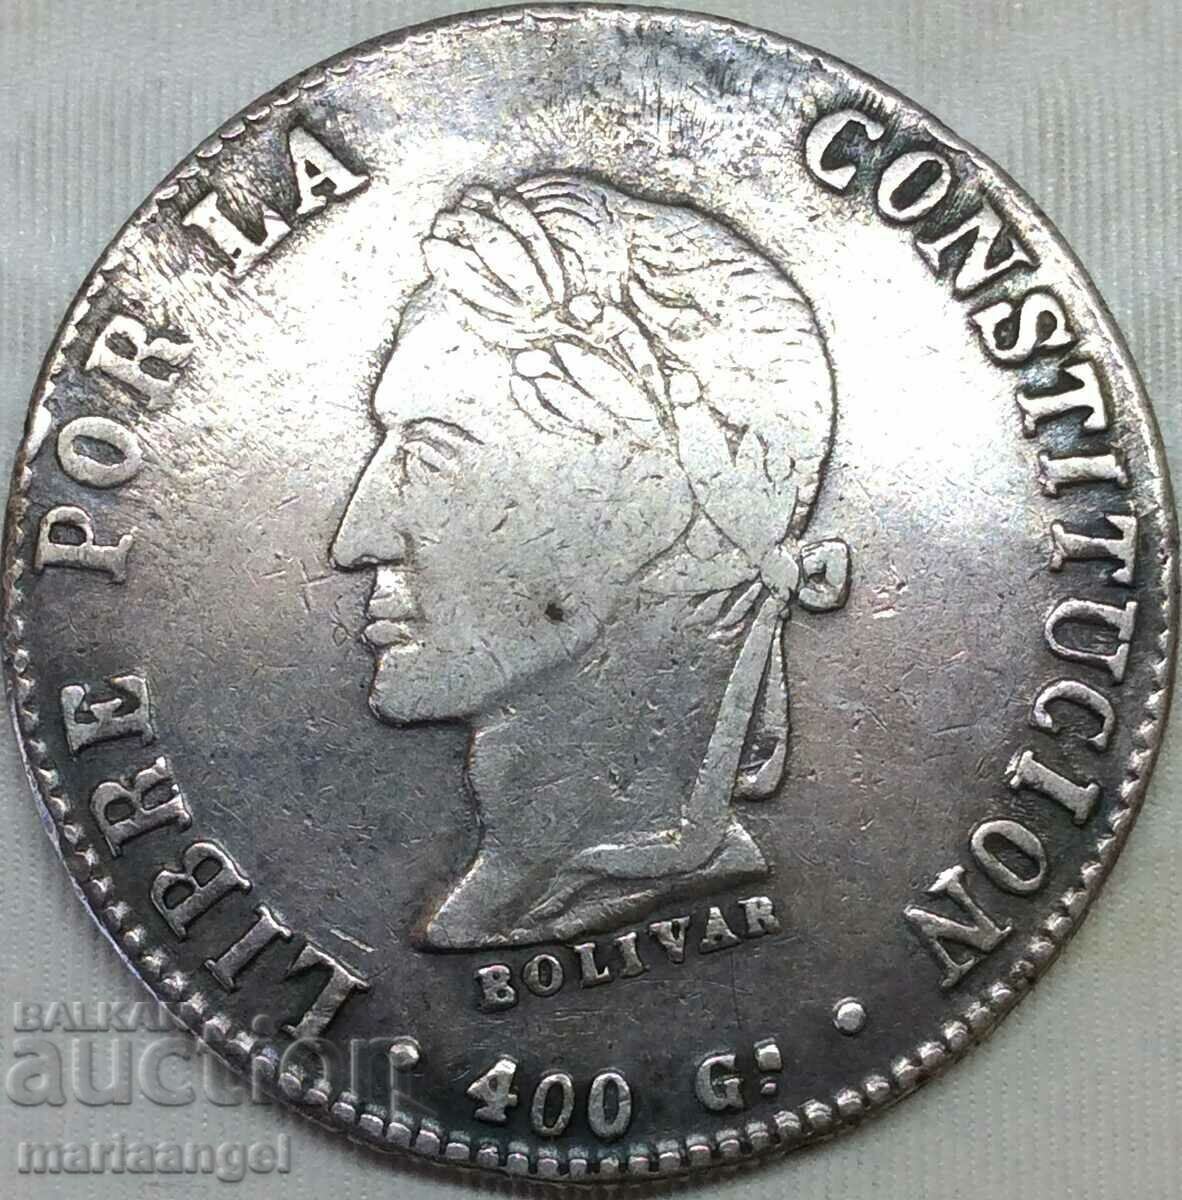 Bolivia 1863 8 sol Taler Simón Bolívar (1783-1830) silver